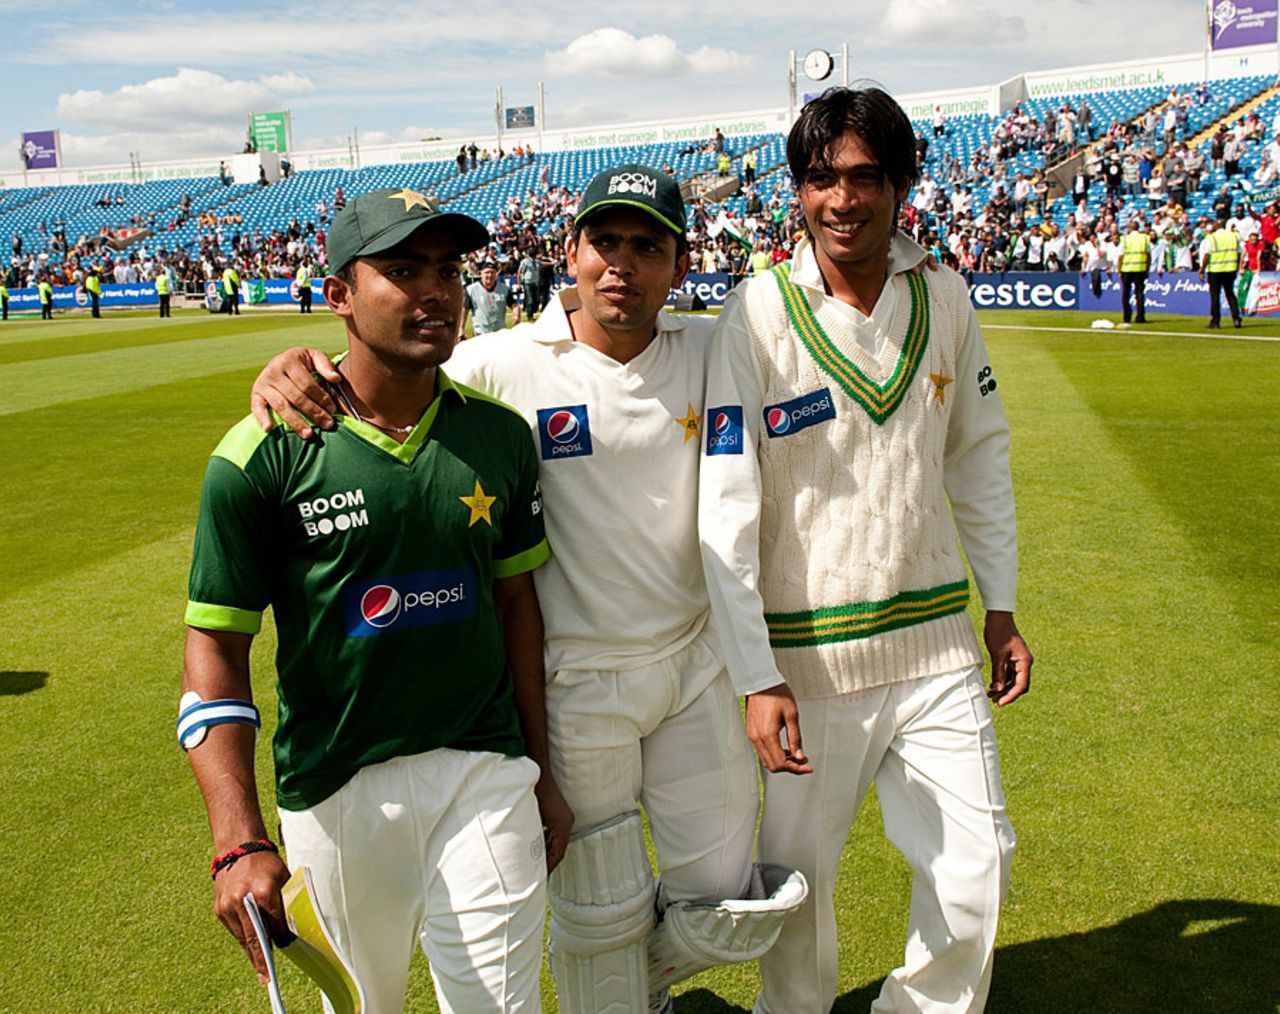 Umar Akmal, Kamran Akmal and Mohammad Amir walk the ground after the win, Pakistan v Australia, 2nd Test, Headingley, 4th day, July 24 2010